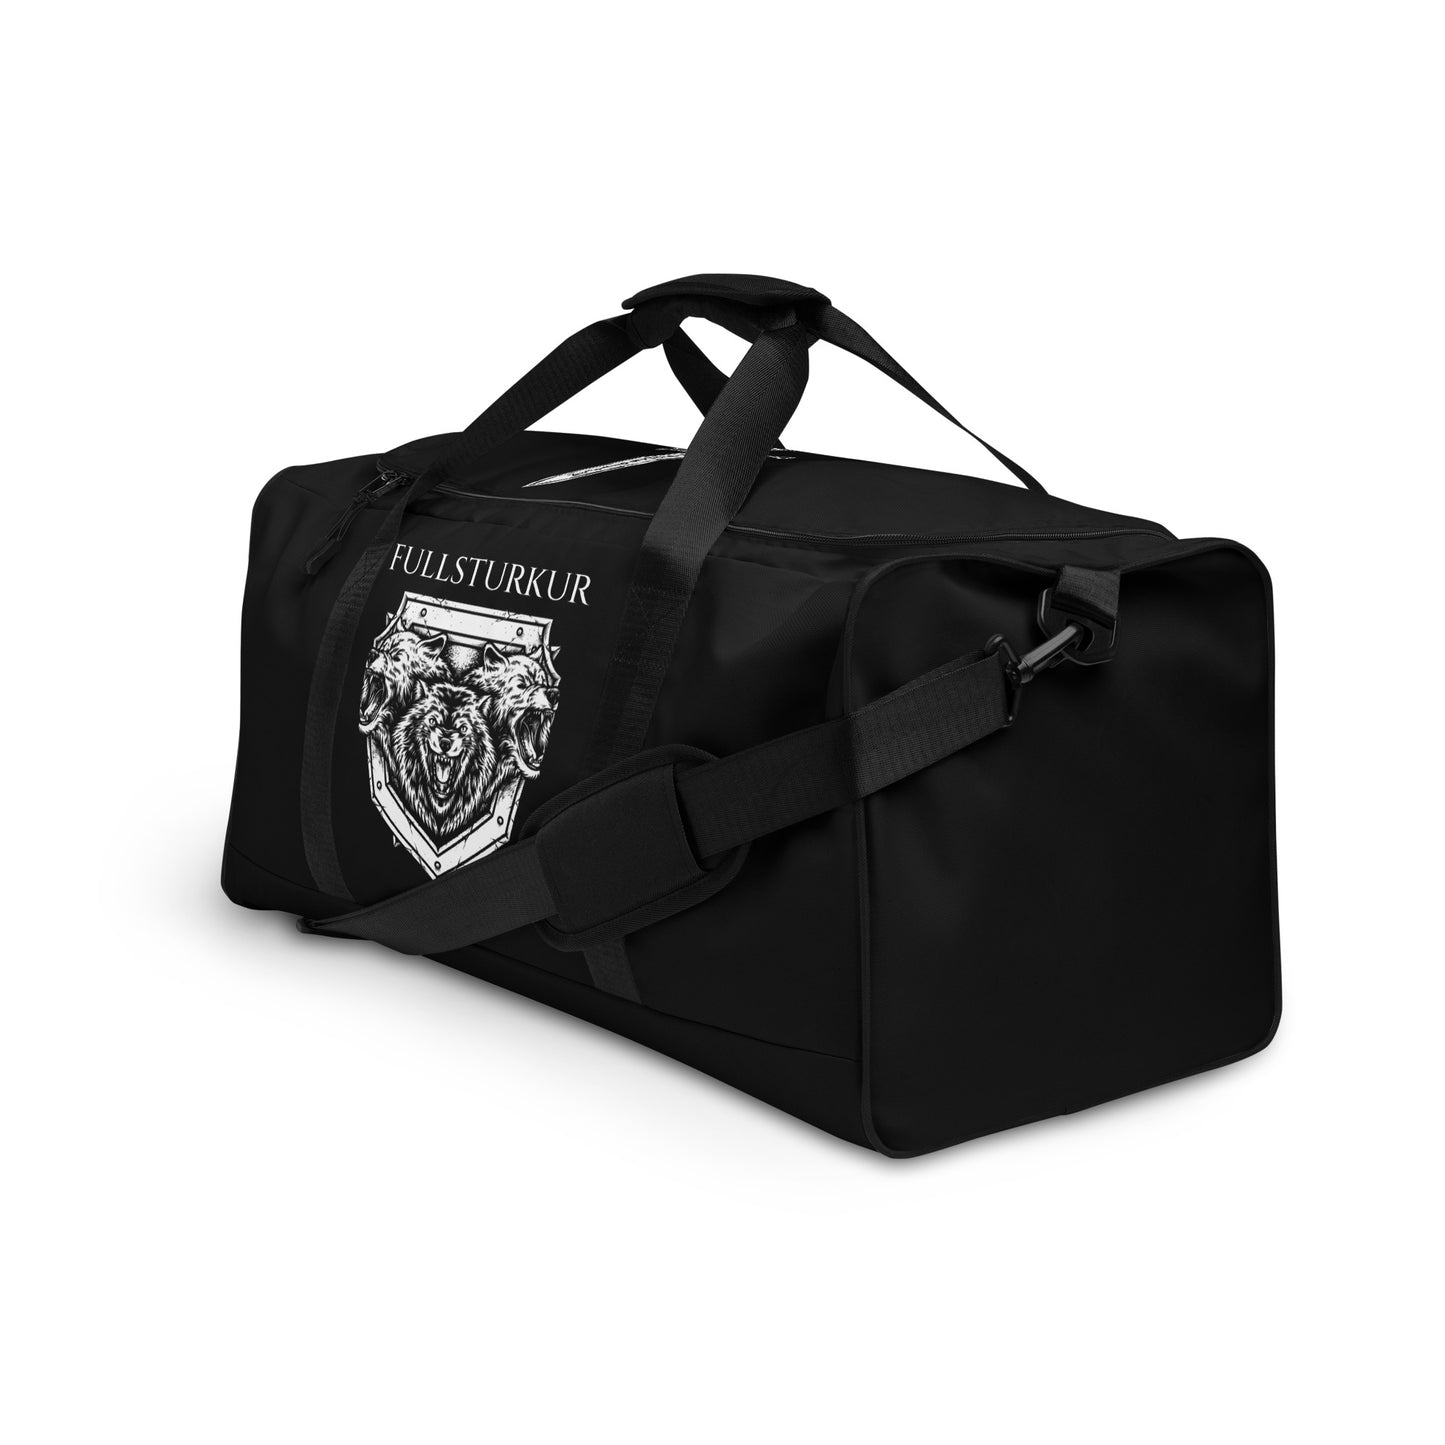 Duffle bag - Black / White Cerberus Bag